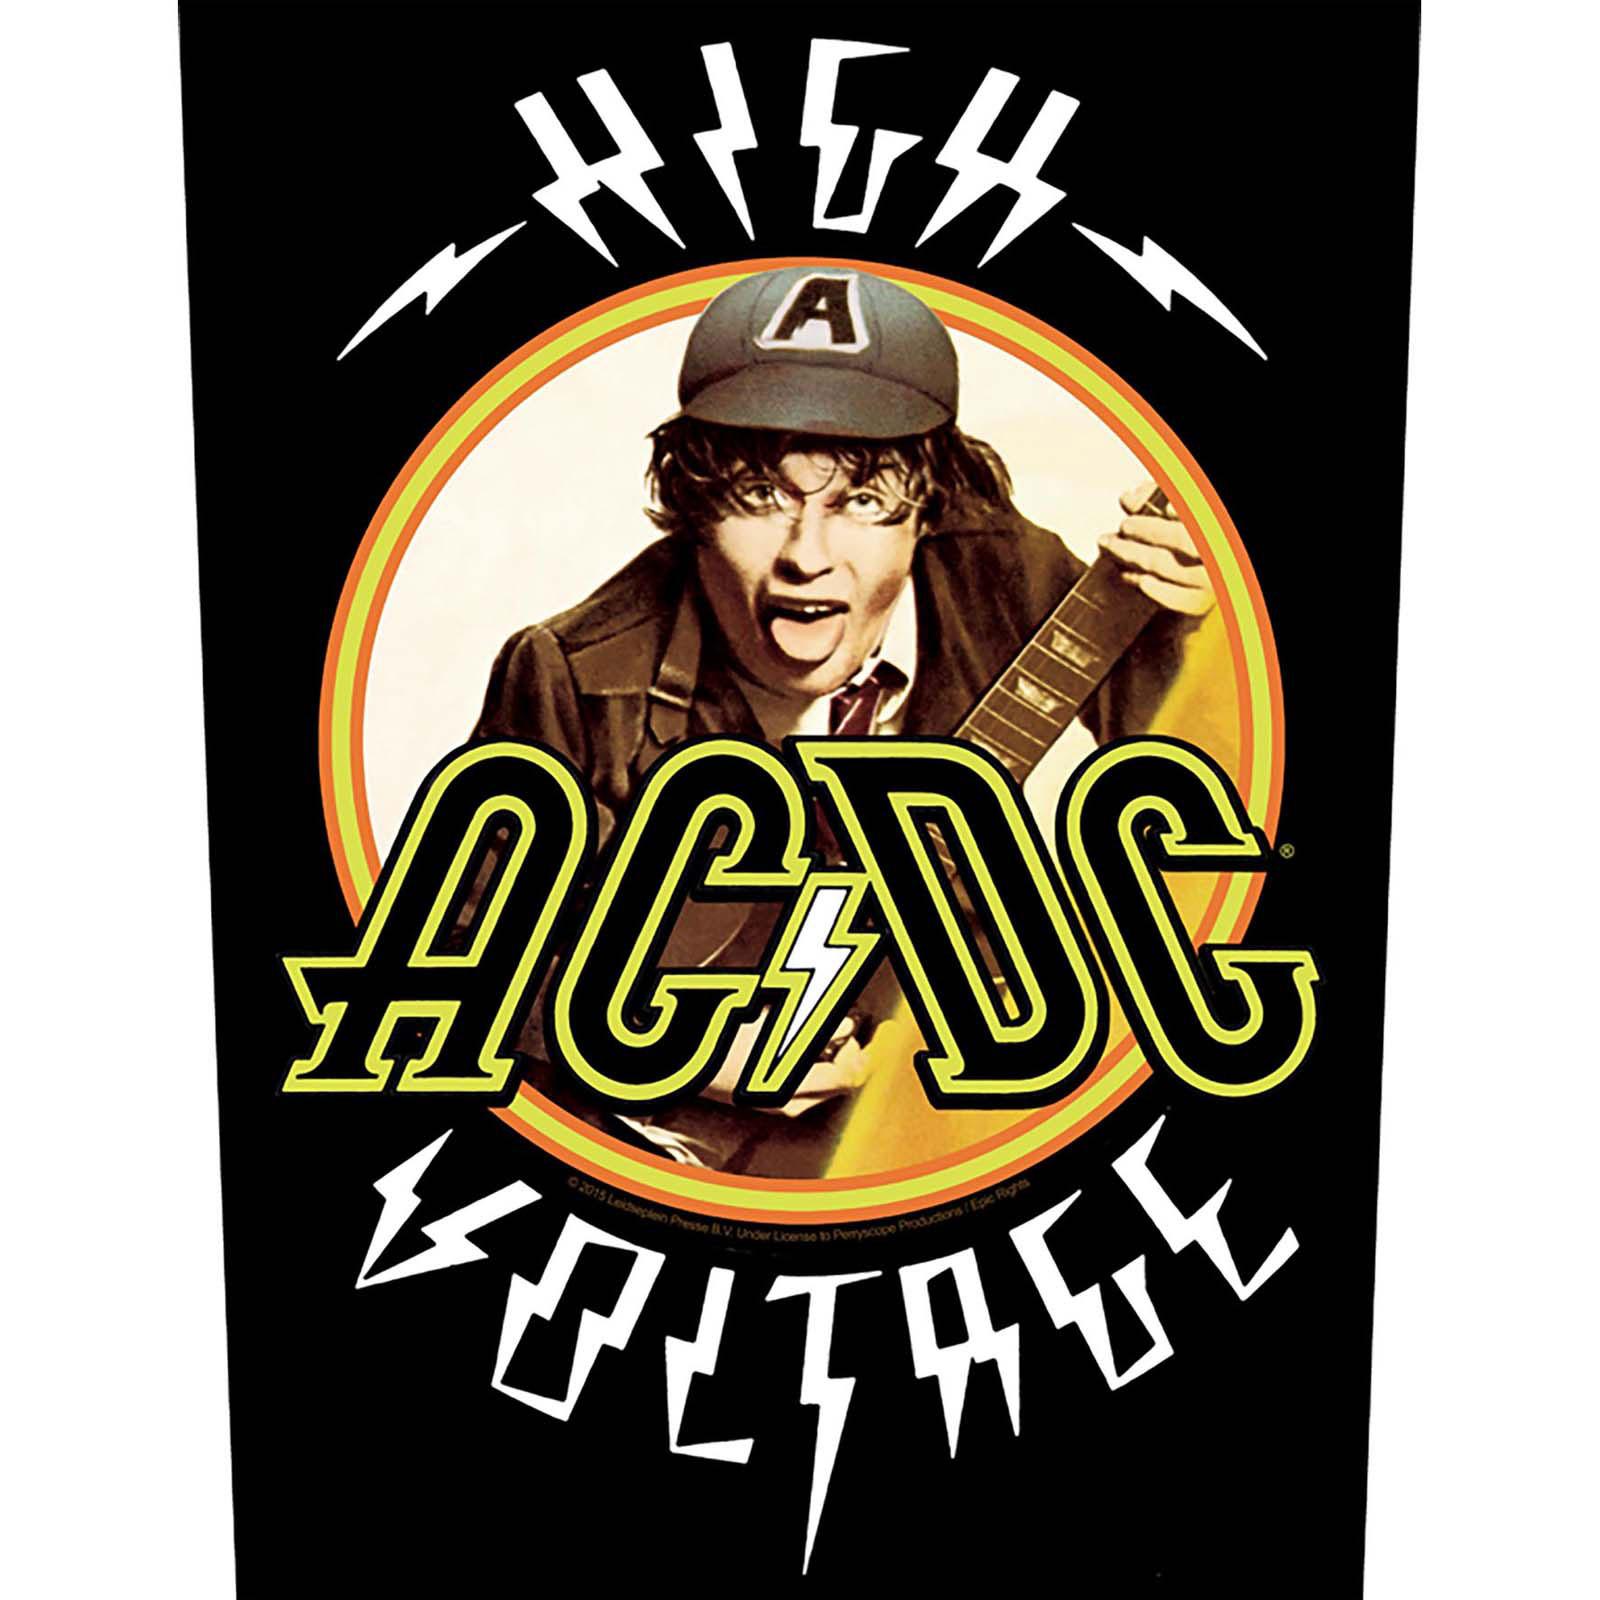 Ac dc high. AC DC High Voltage обложка. AC DC 1976 High Voltage. AC DC напряжение. Плакат AC DC High Voltage.